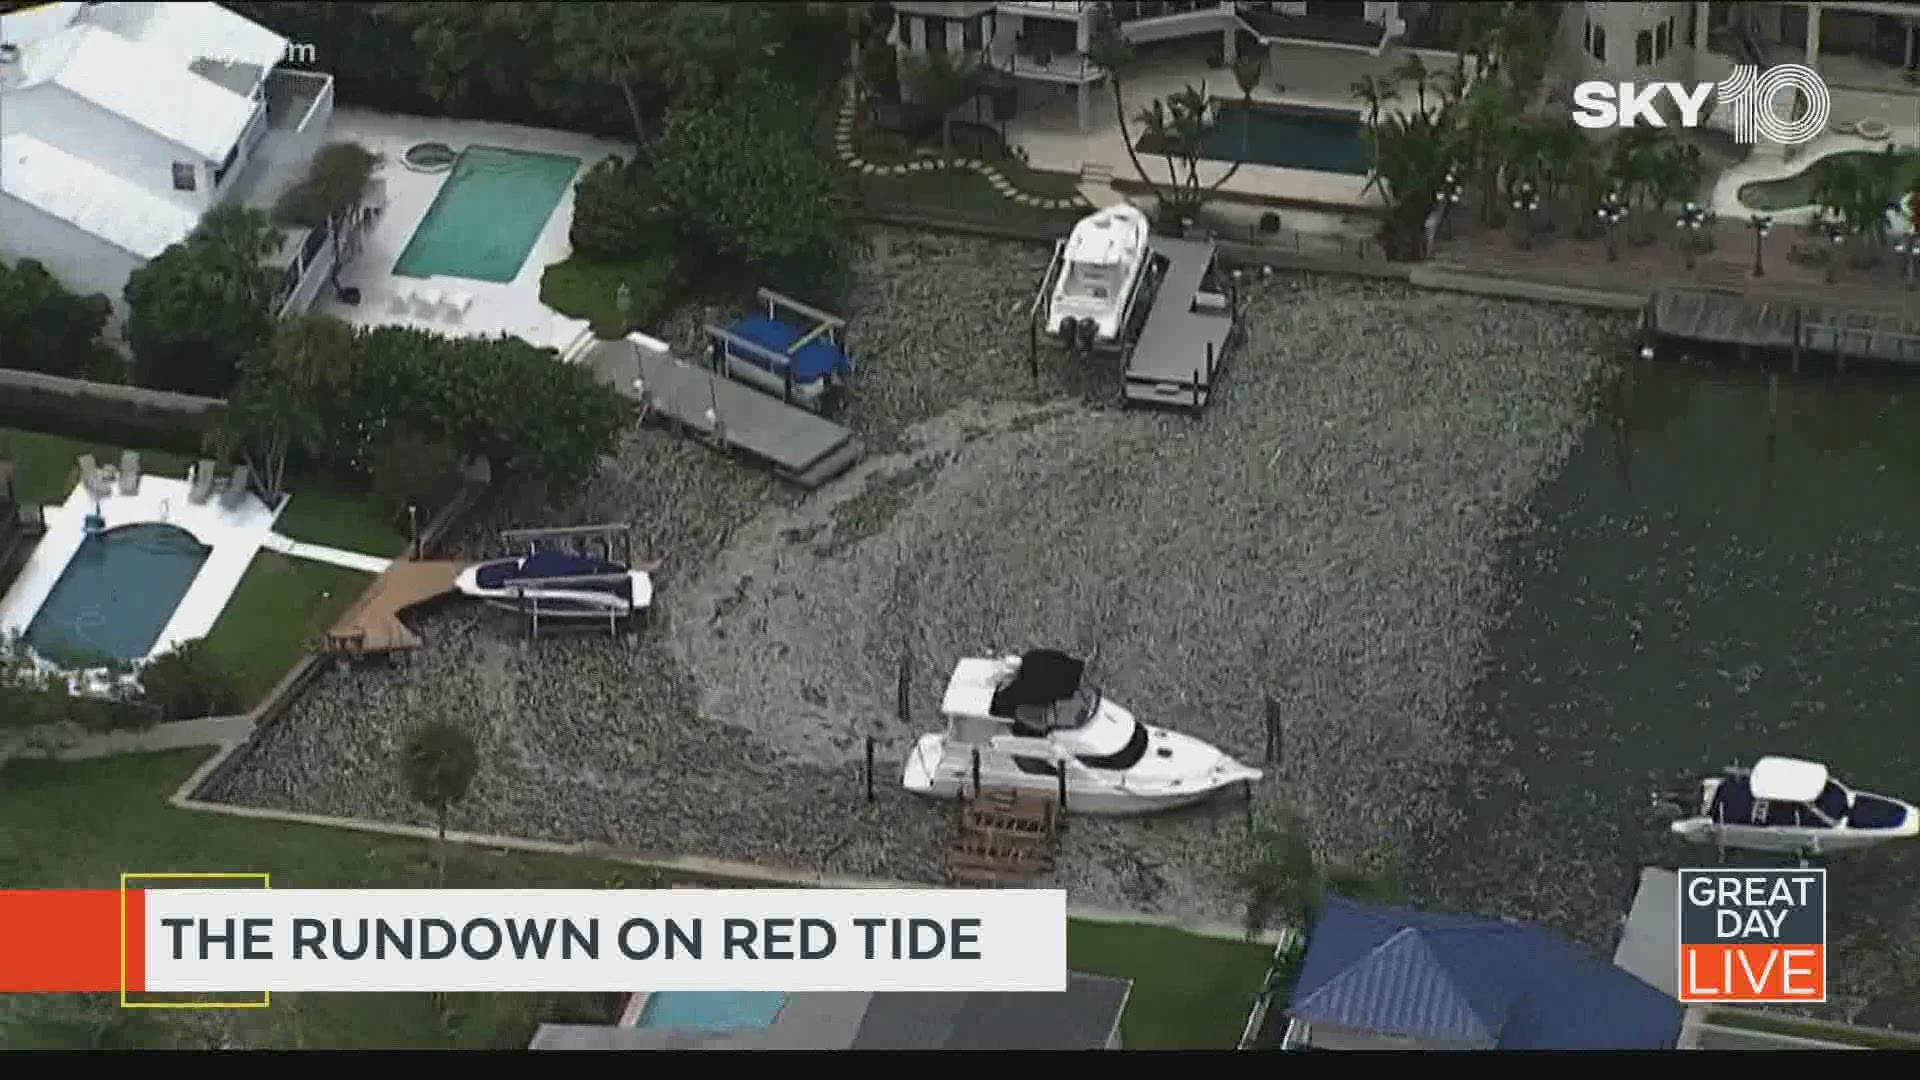 The rundown on red tide